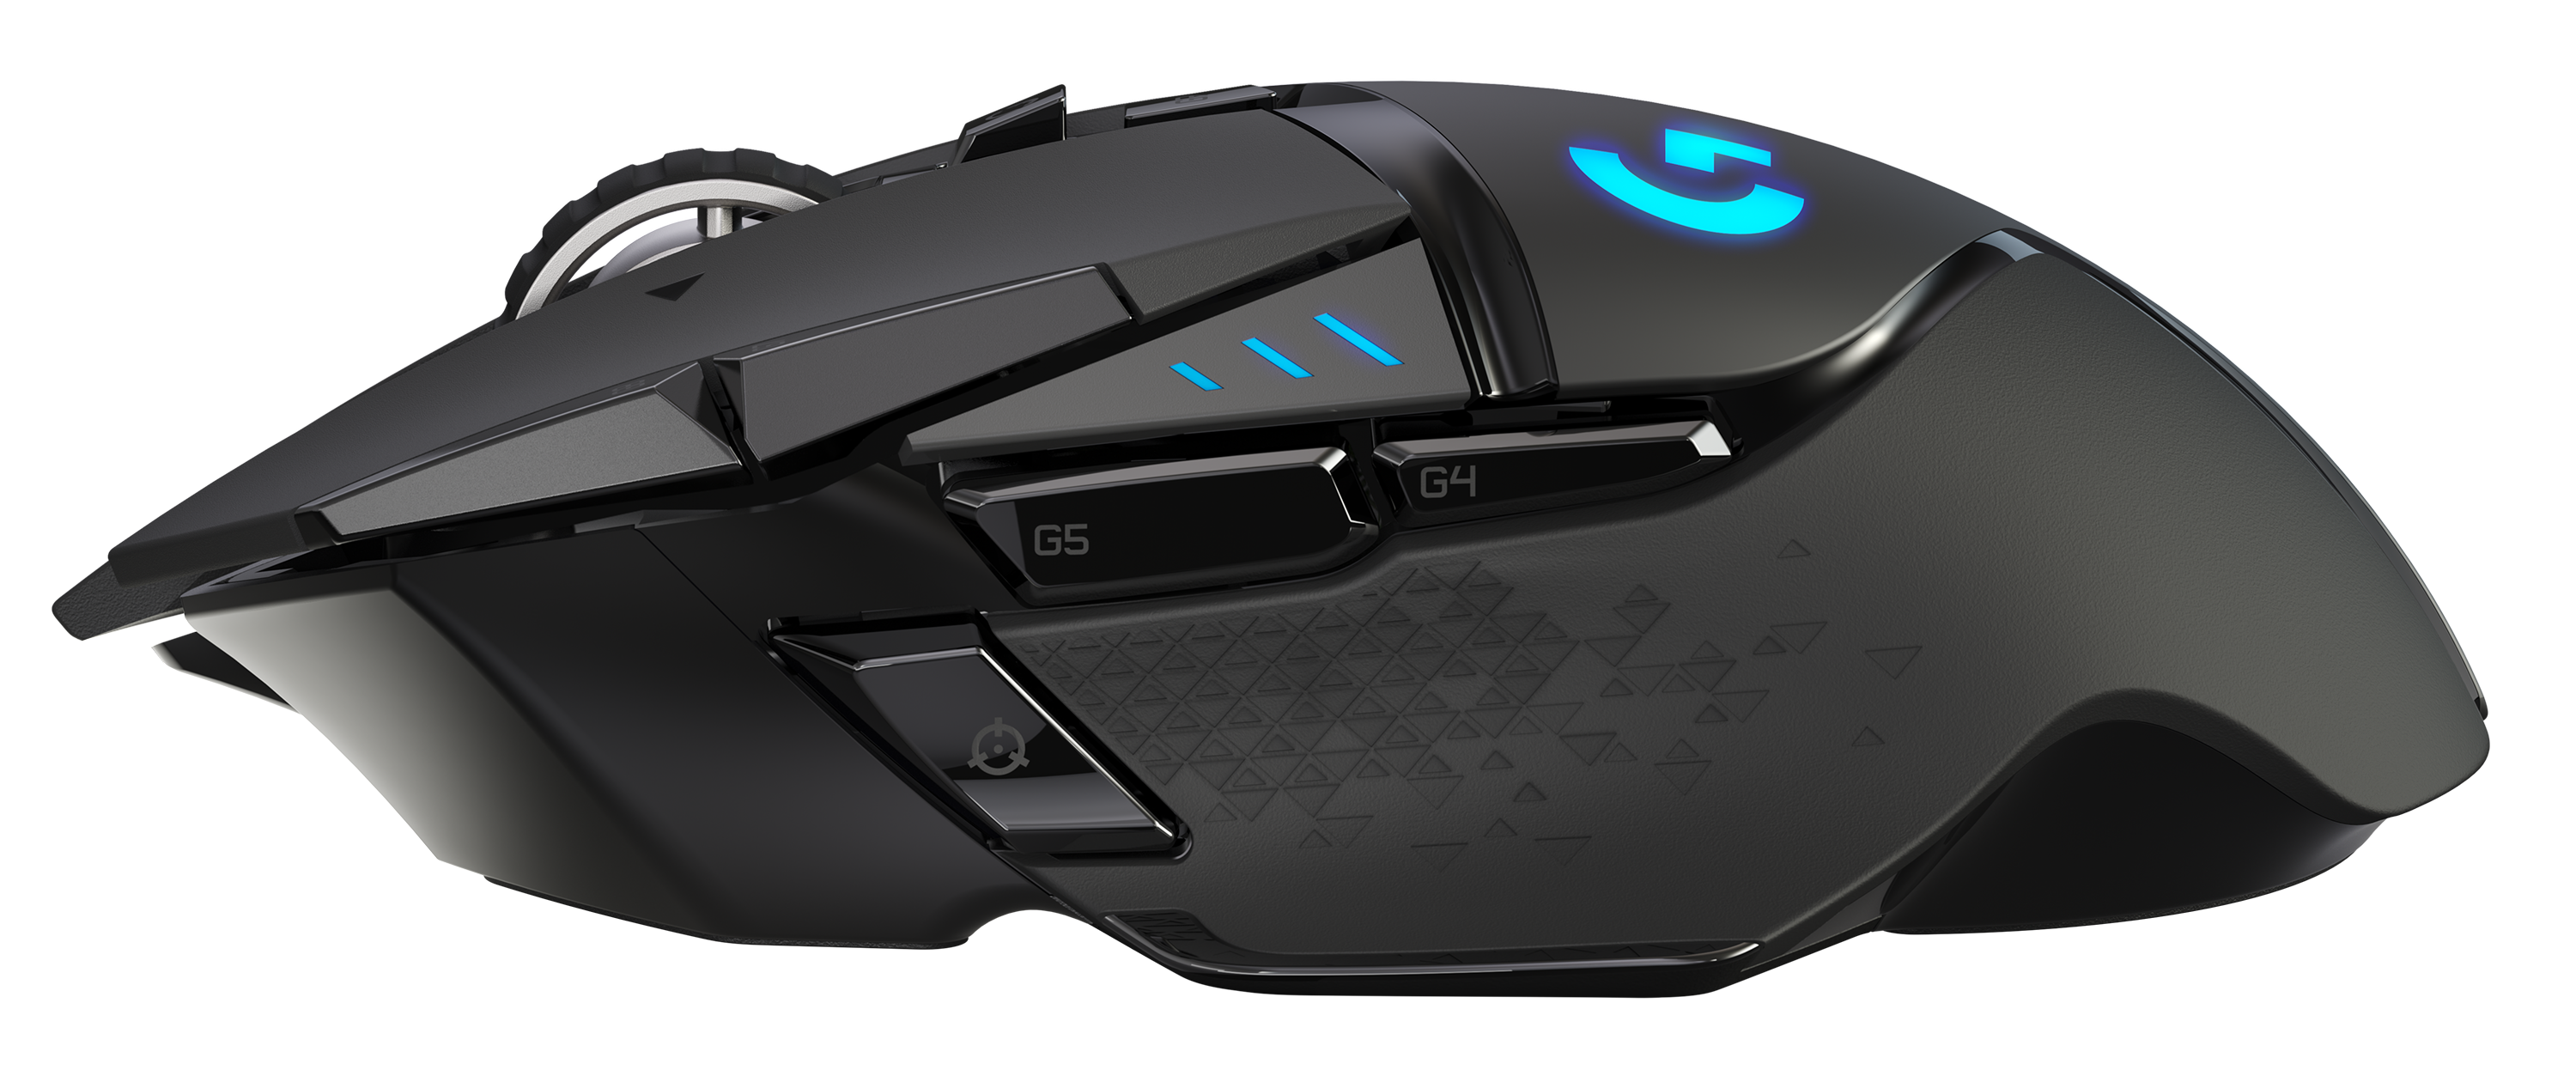 Logitech G502 LIGHTSPEED - Best Gaming Mice